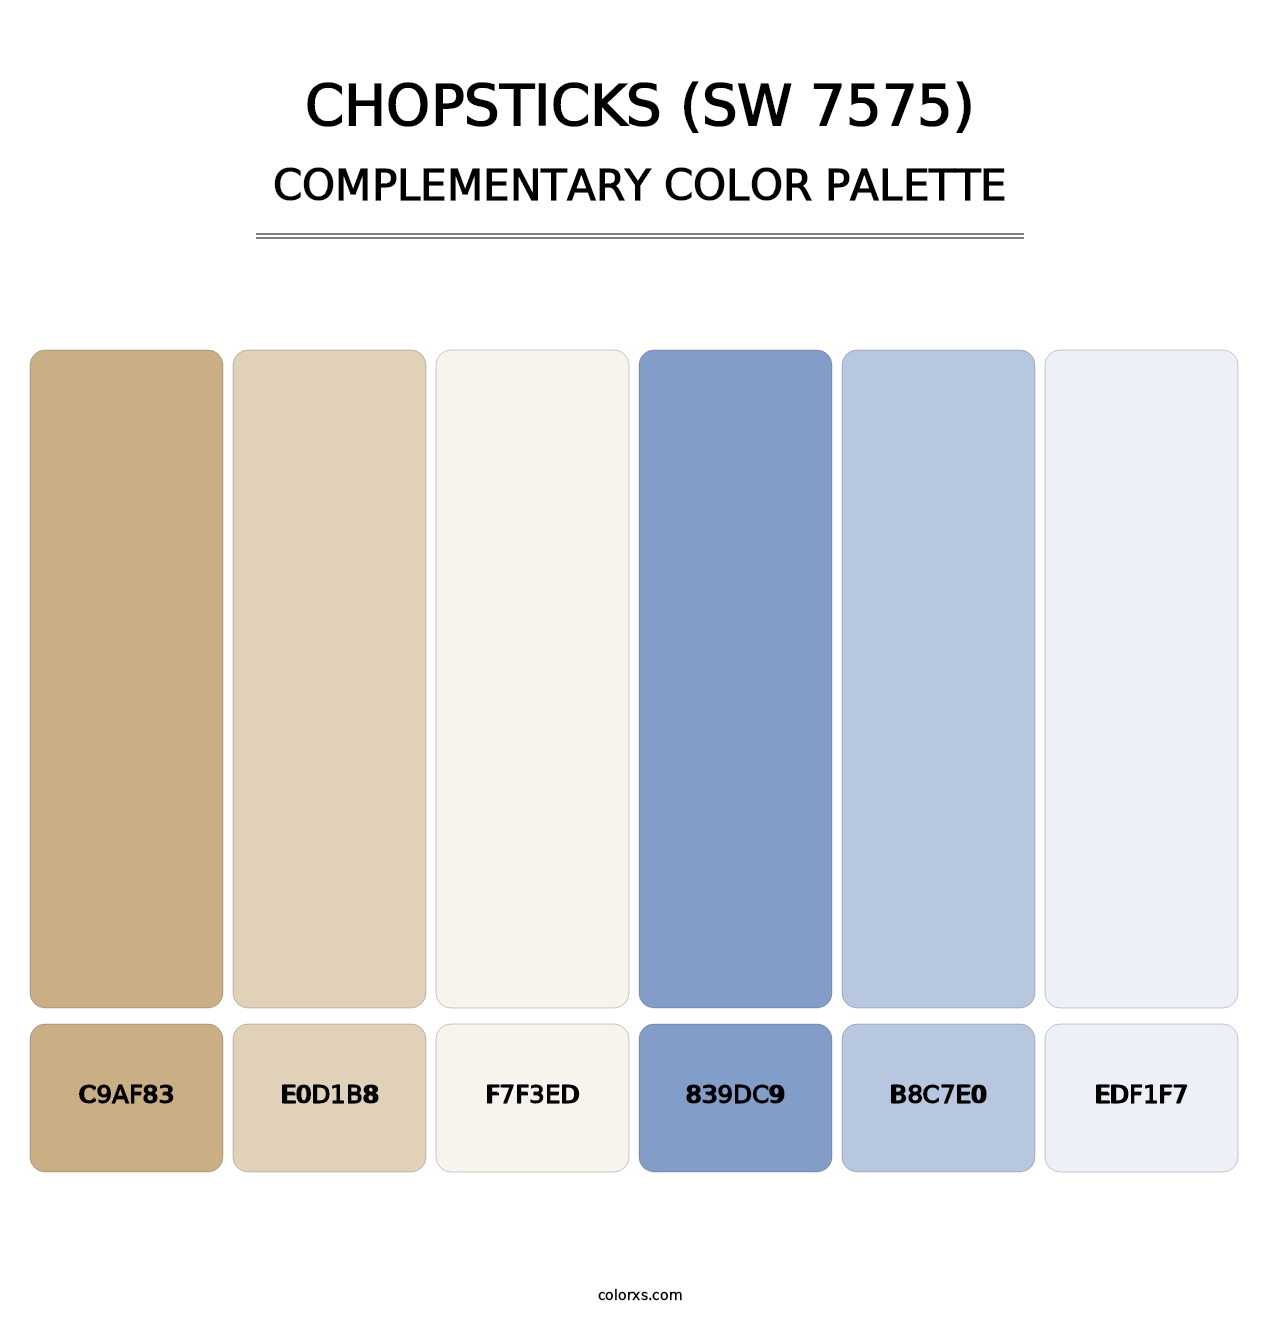 Chopsticks (SW 7575) - Complementary Color Palette